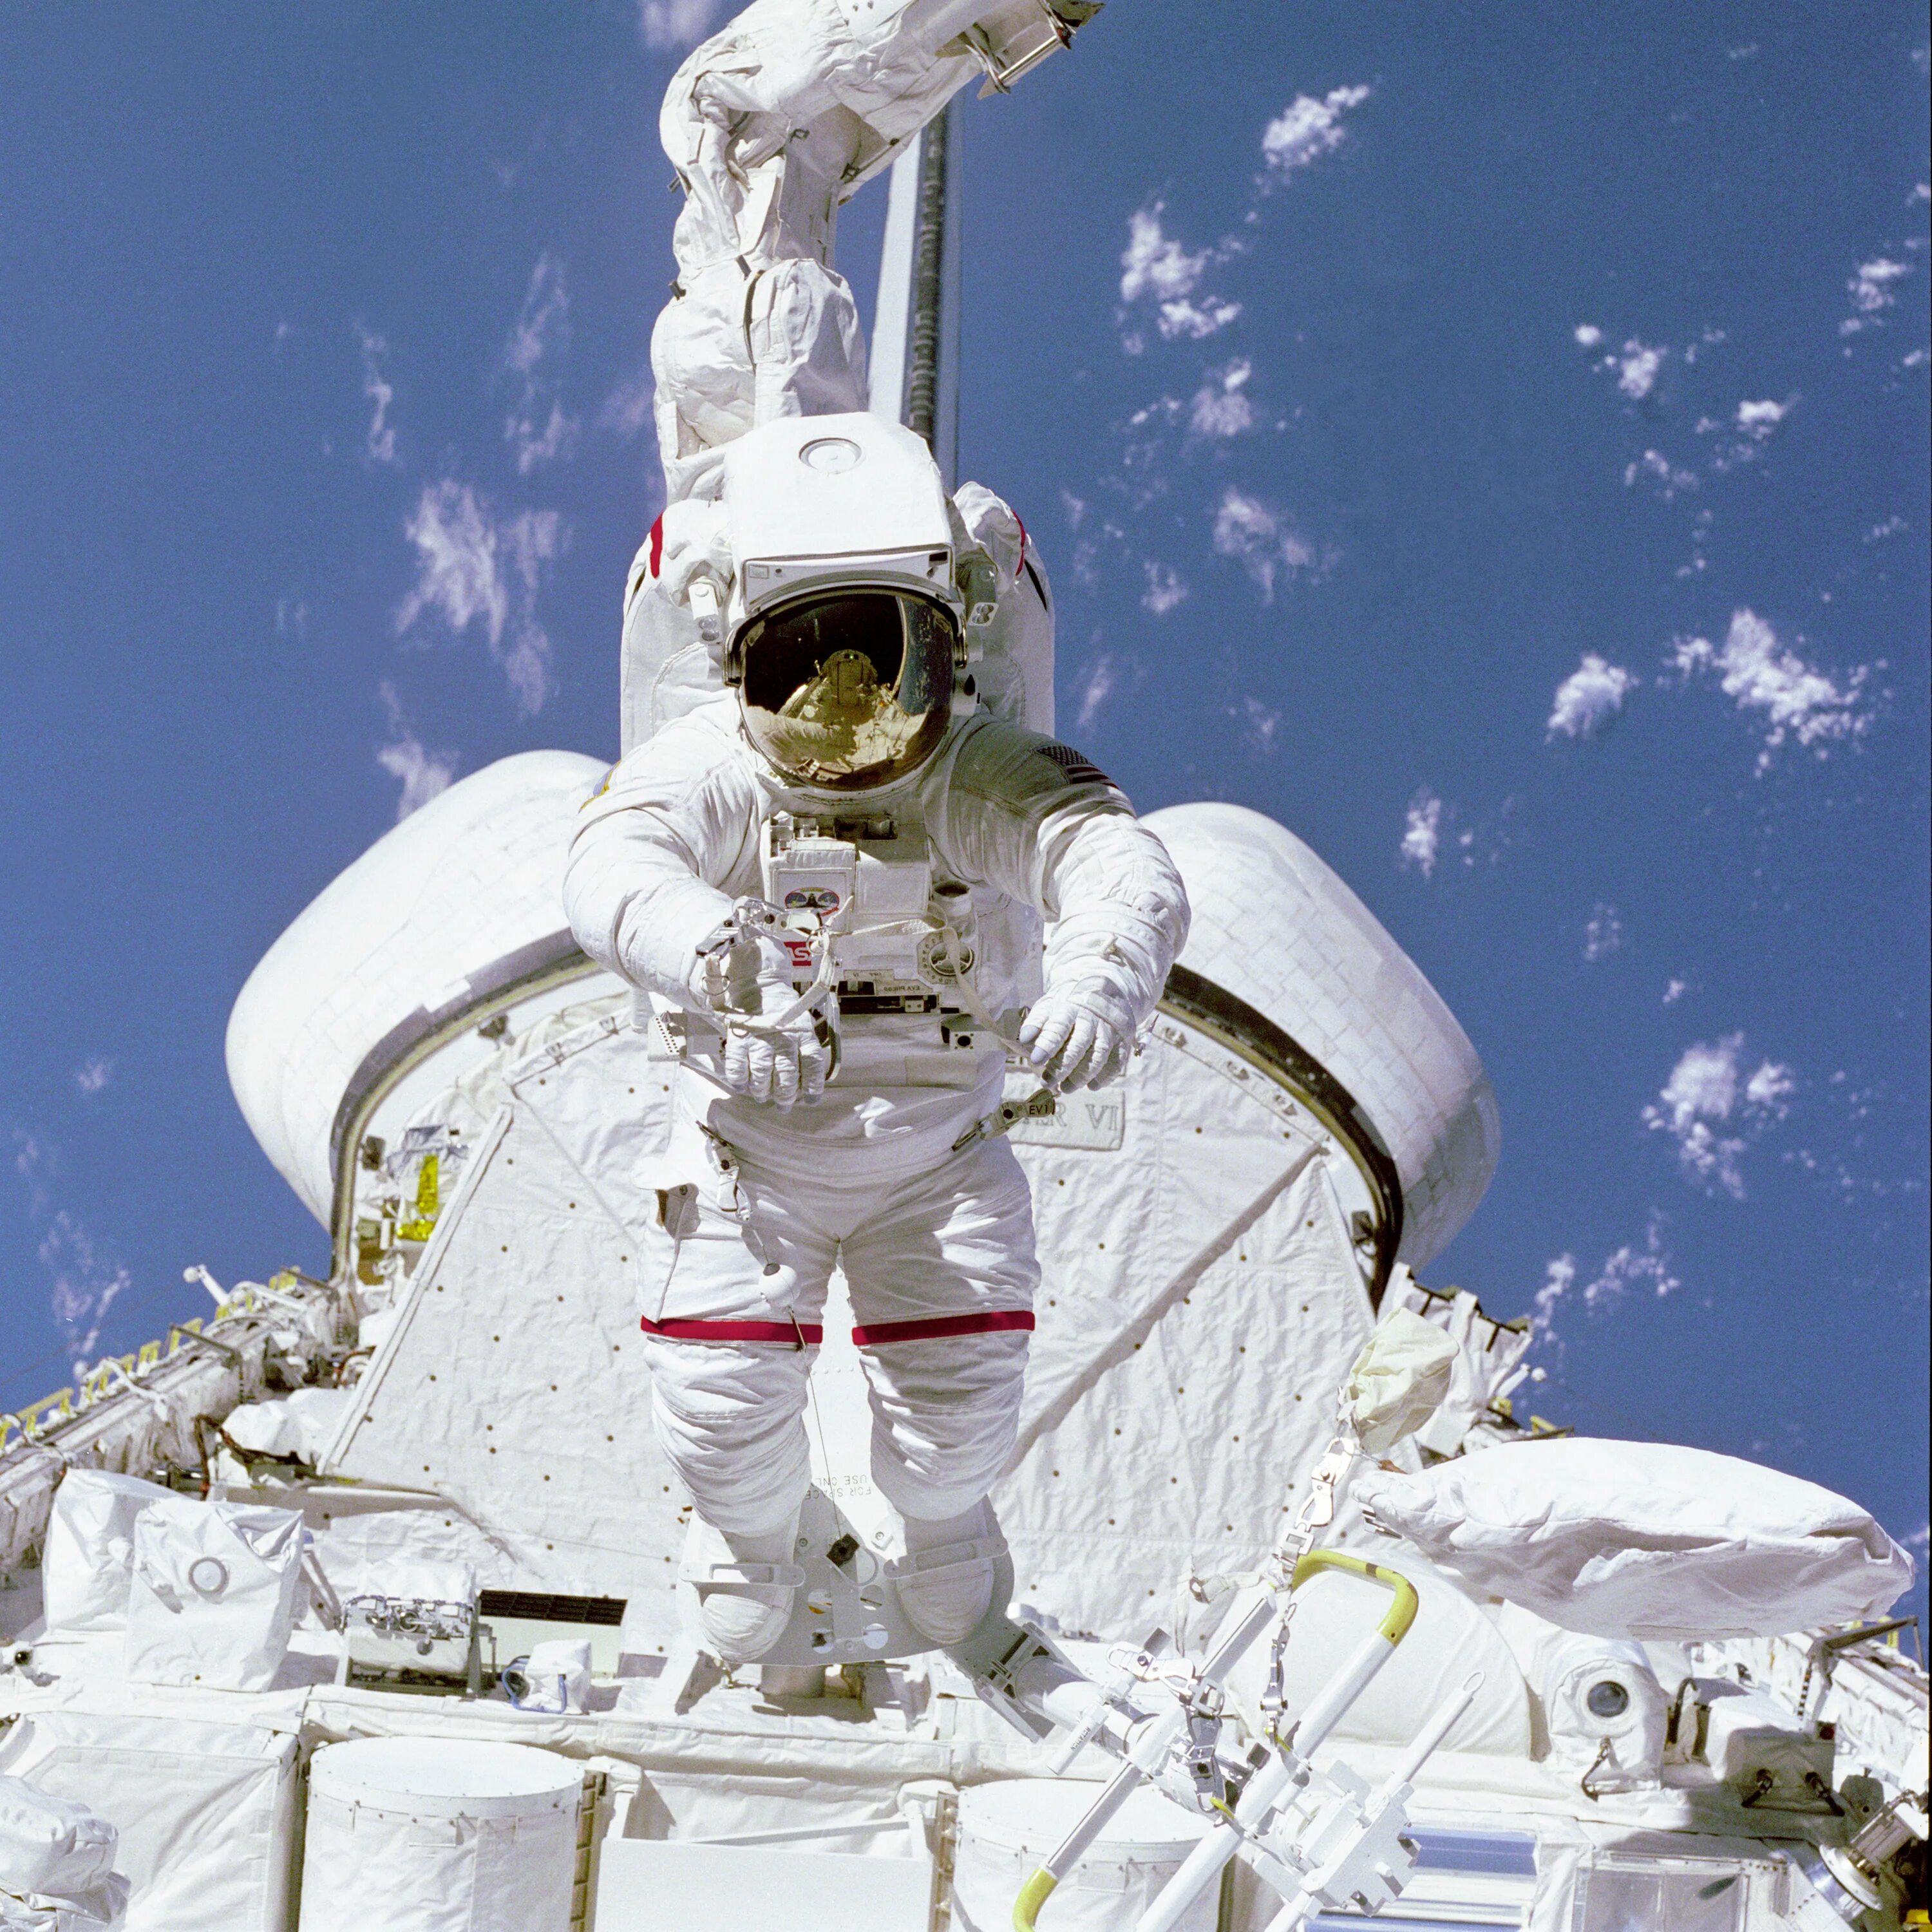 Астронавт Брюс Маккэндлесс. Астронавт Брюс Маккэндлесс II. Брюс Маккэндлесс в открытом космосе. Космонавтика.